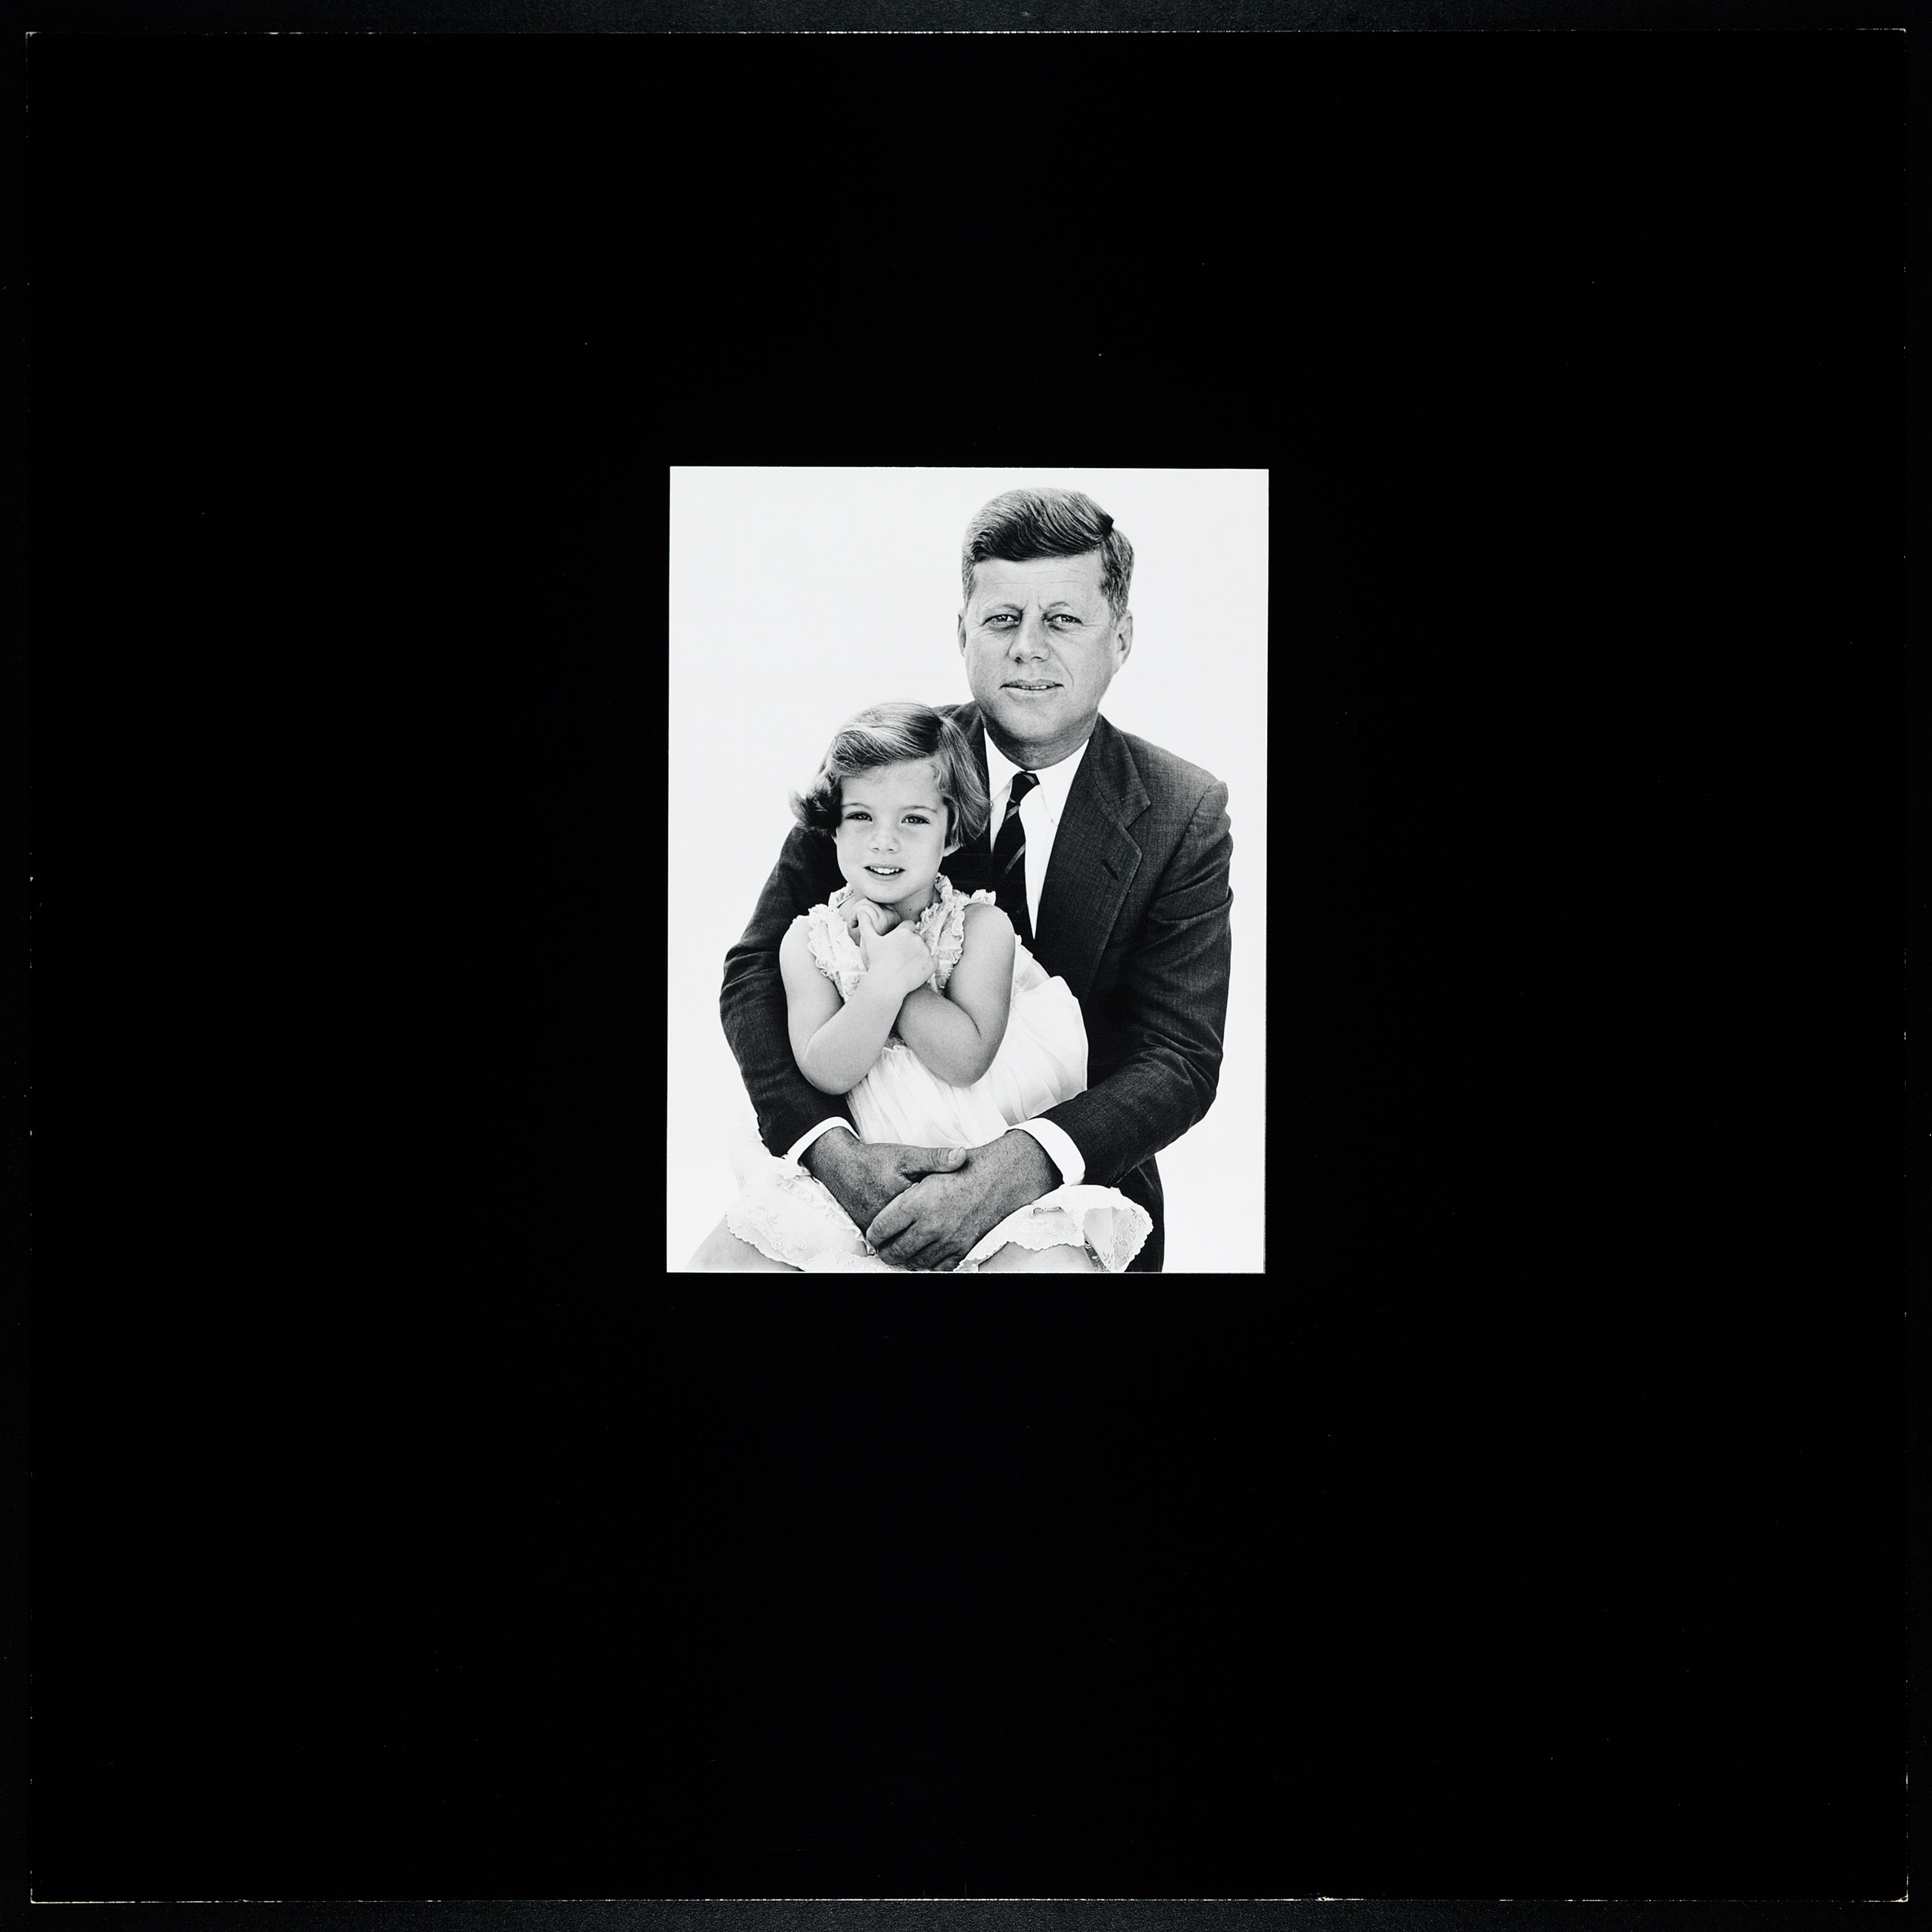 John F. Kennedy and daughter Caroline by Richard Avedon, 1961.